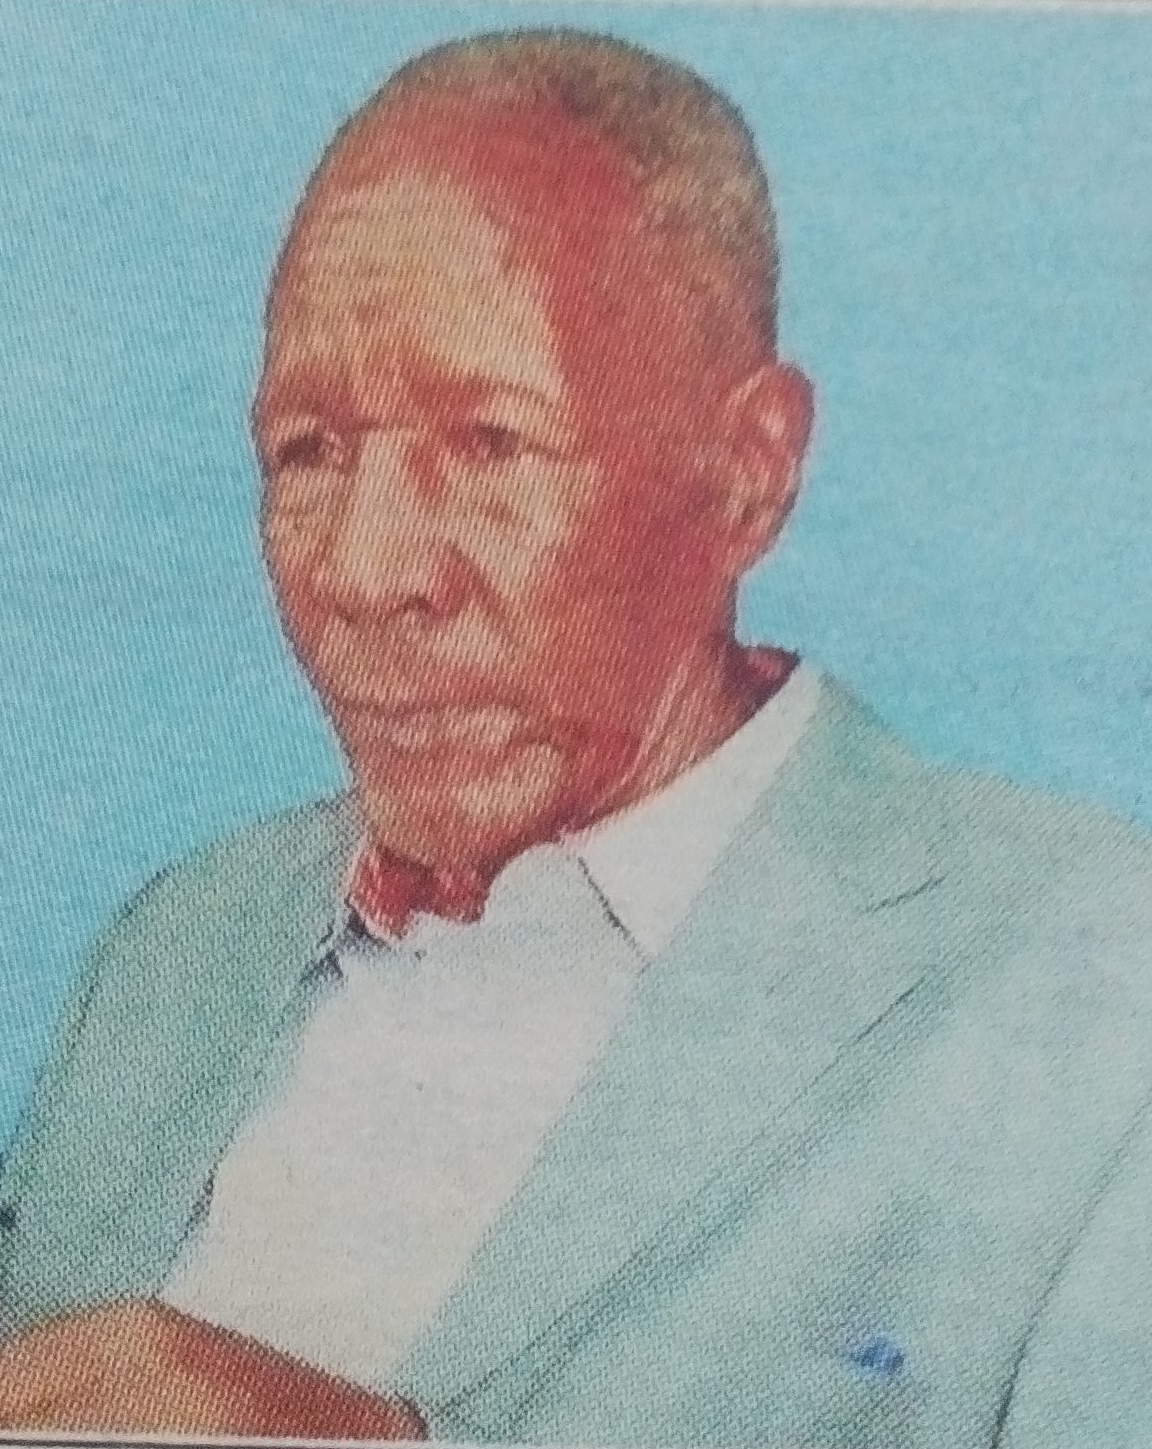 Obituary Image of Joseph Karobia Gicheru